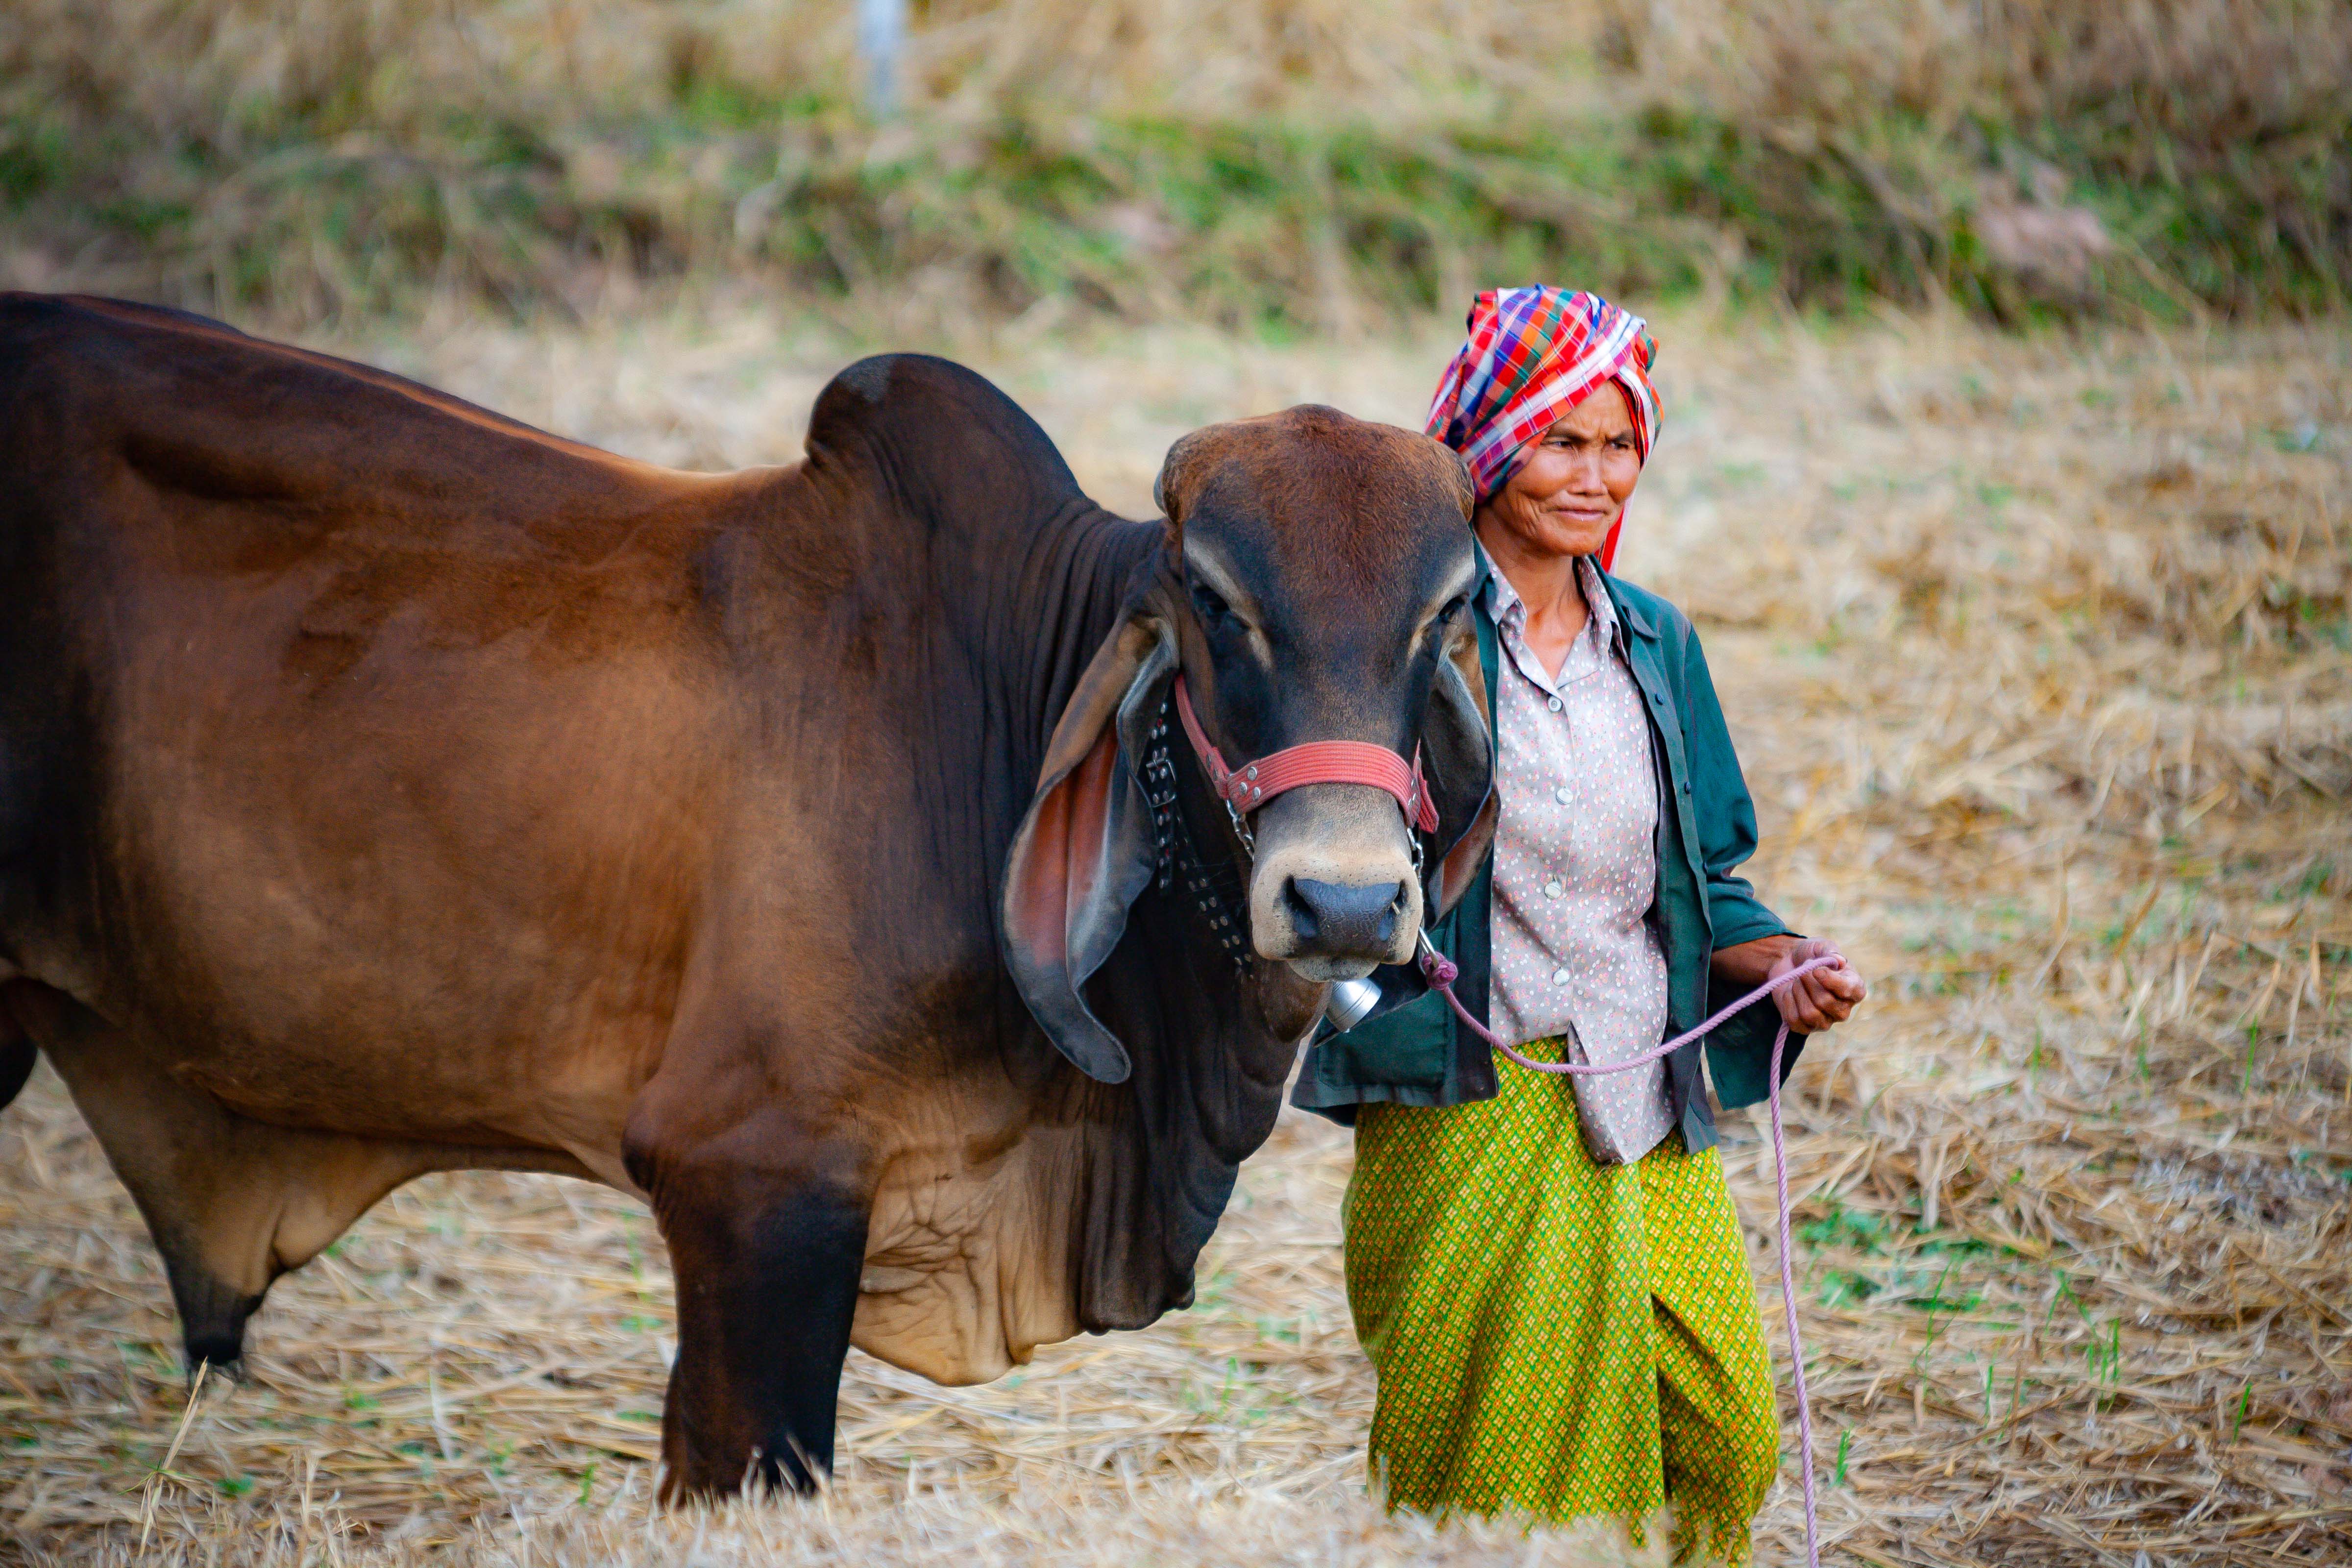 Thailand, Maha Sarakham Prov, Woman And Brahman Bull, 2008, IMG 0707